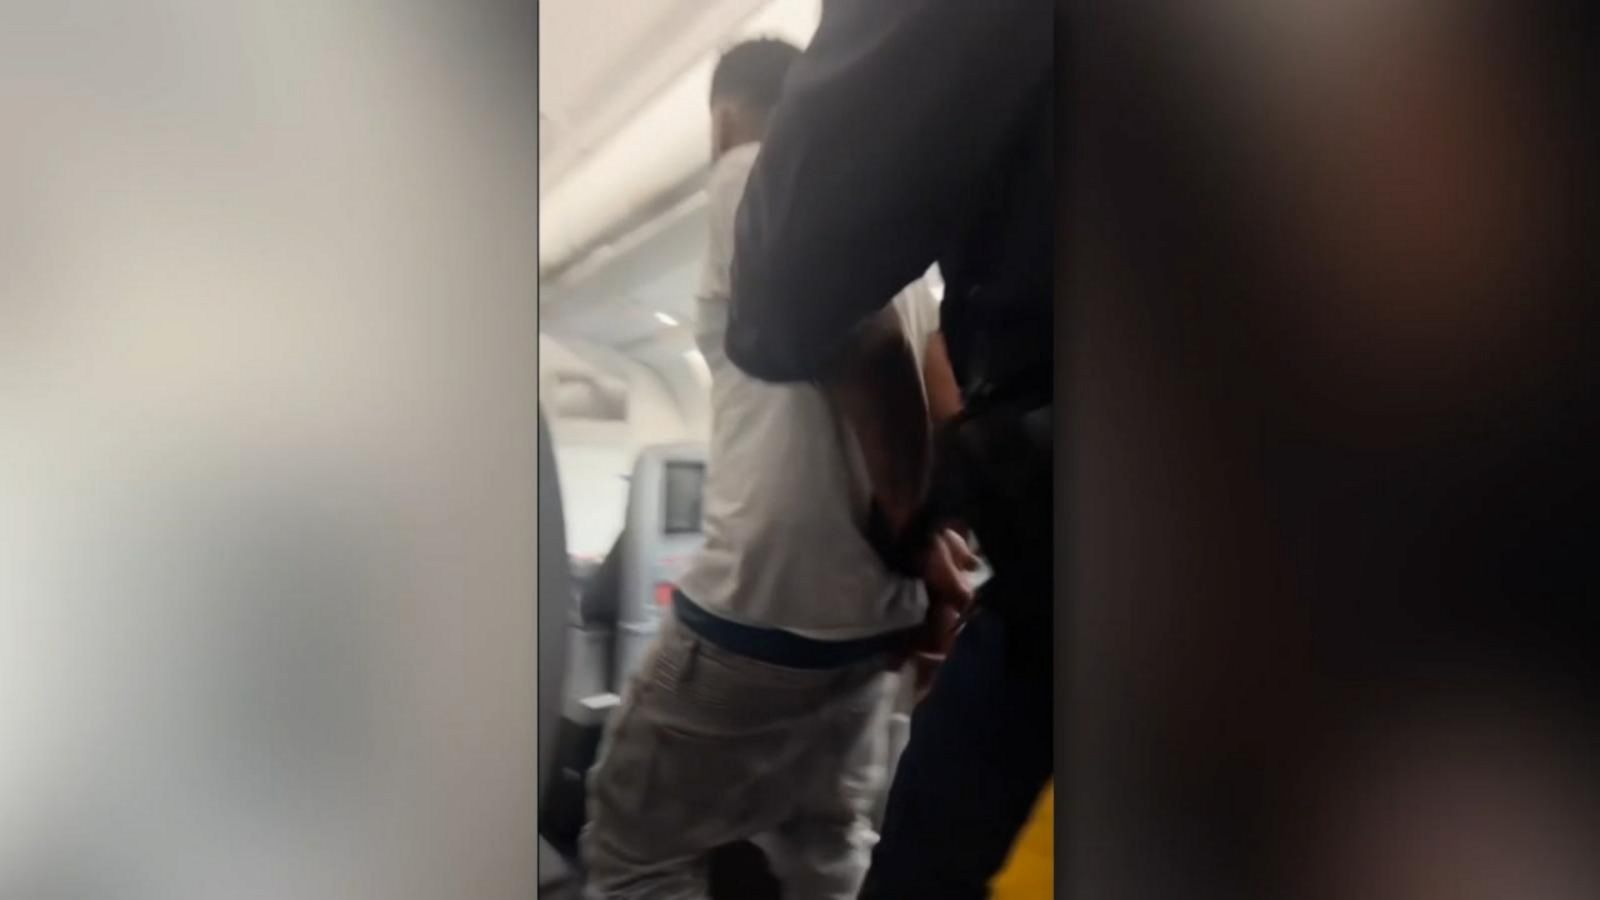 Passengers on Delta flight restrain man police say was threatening violence